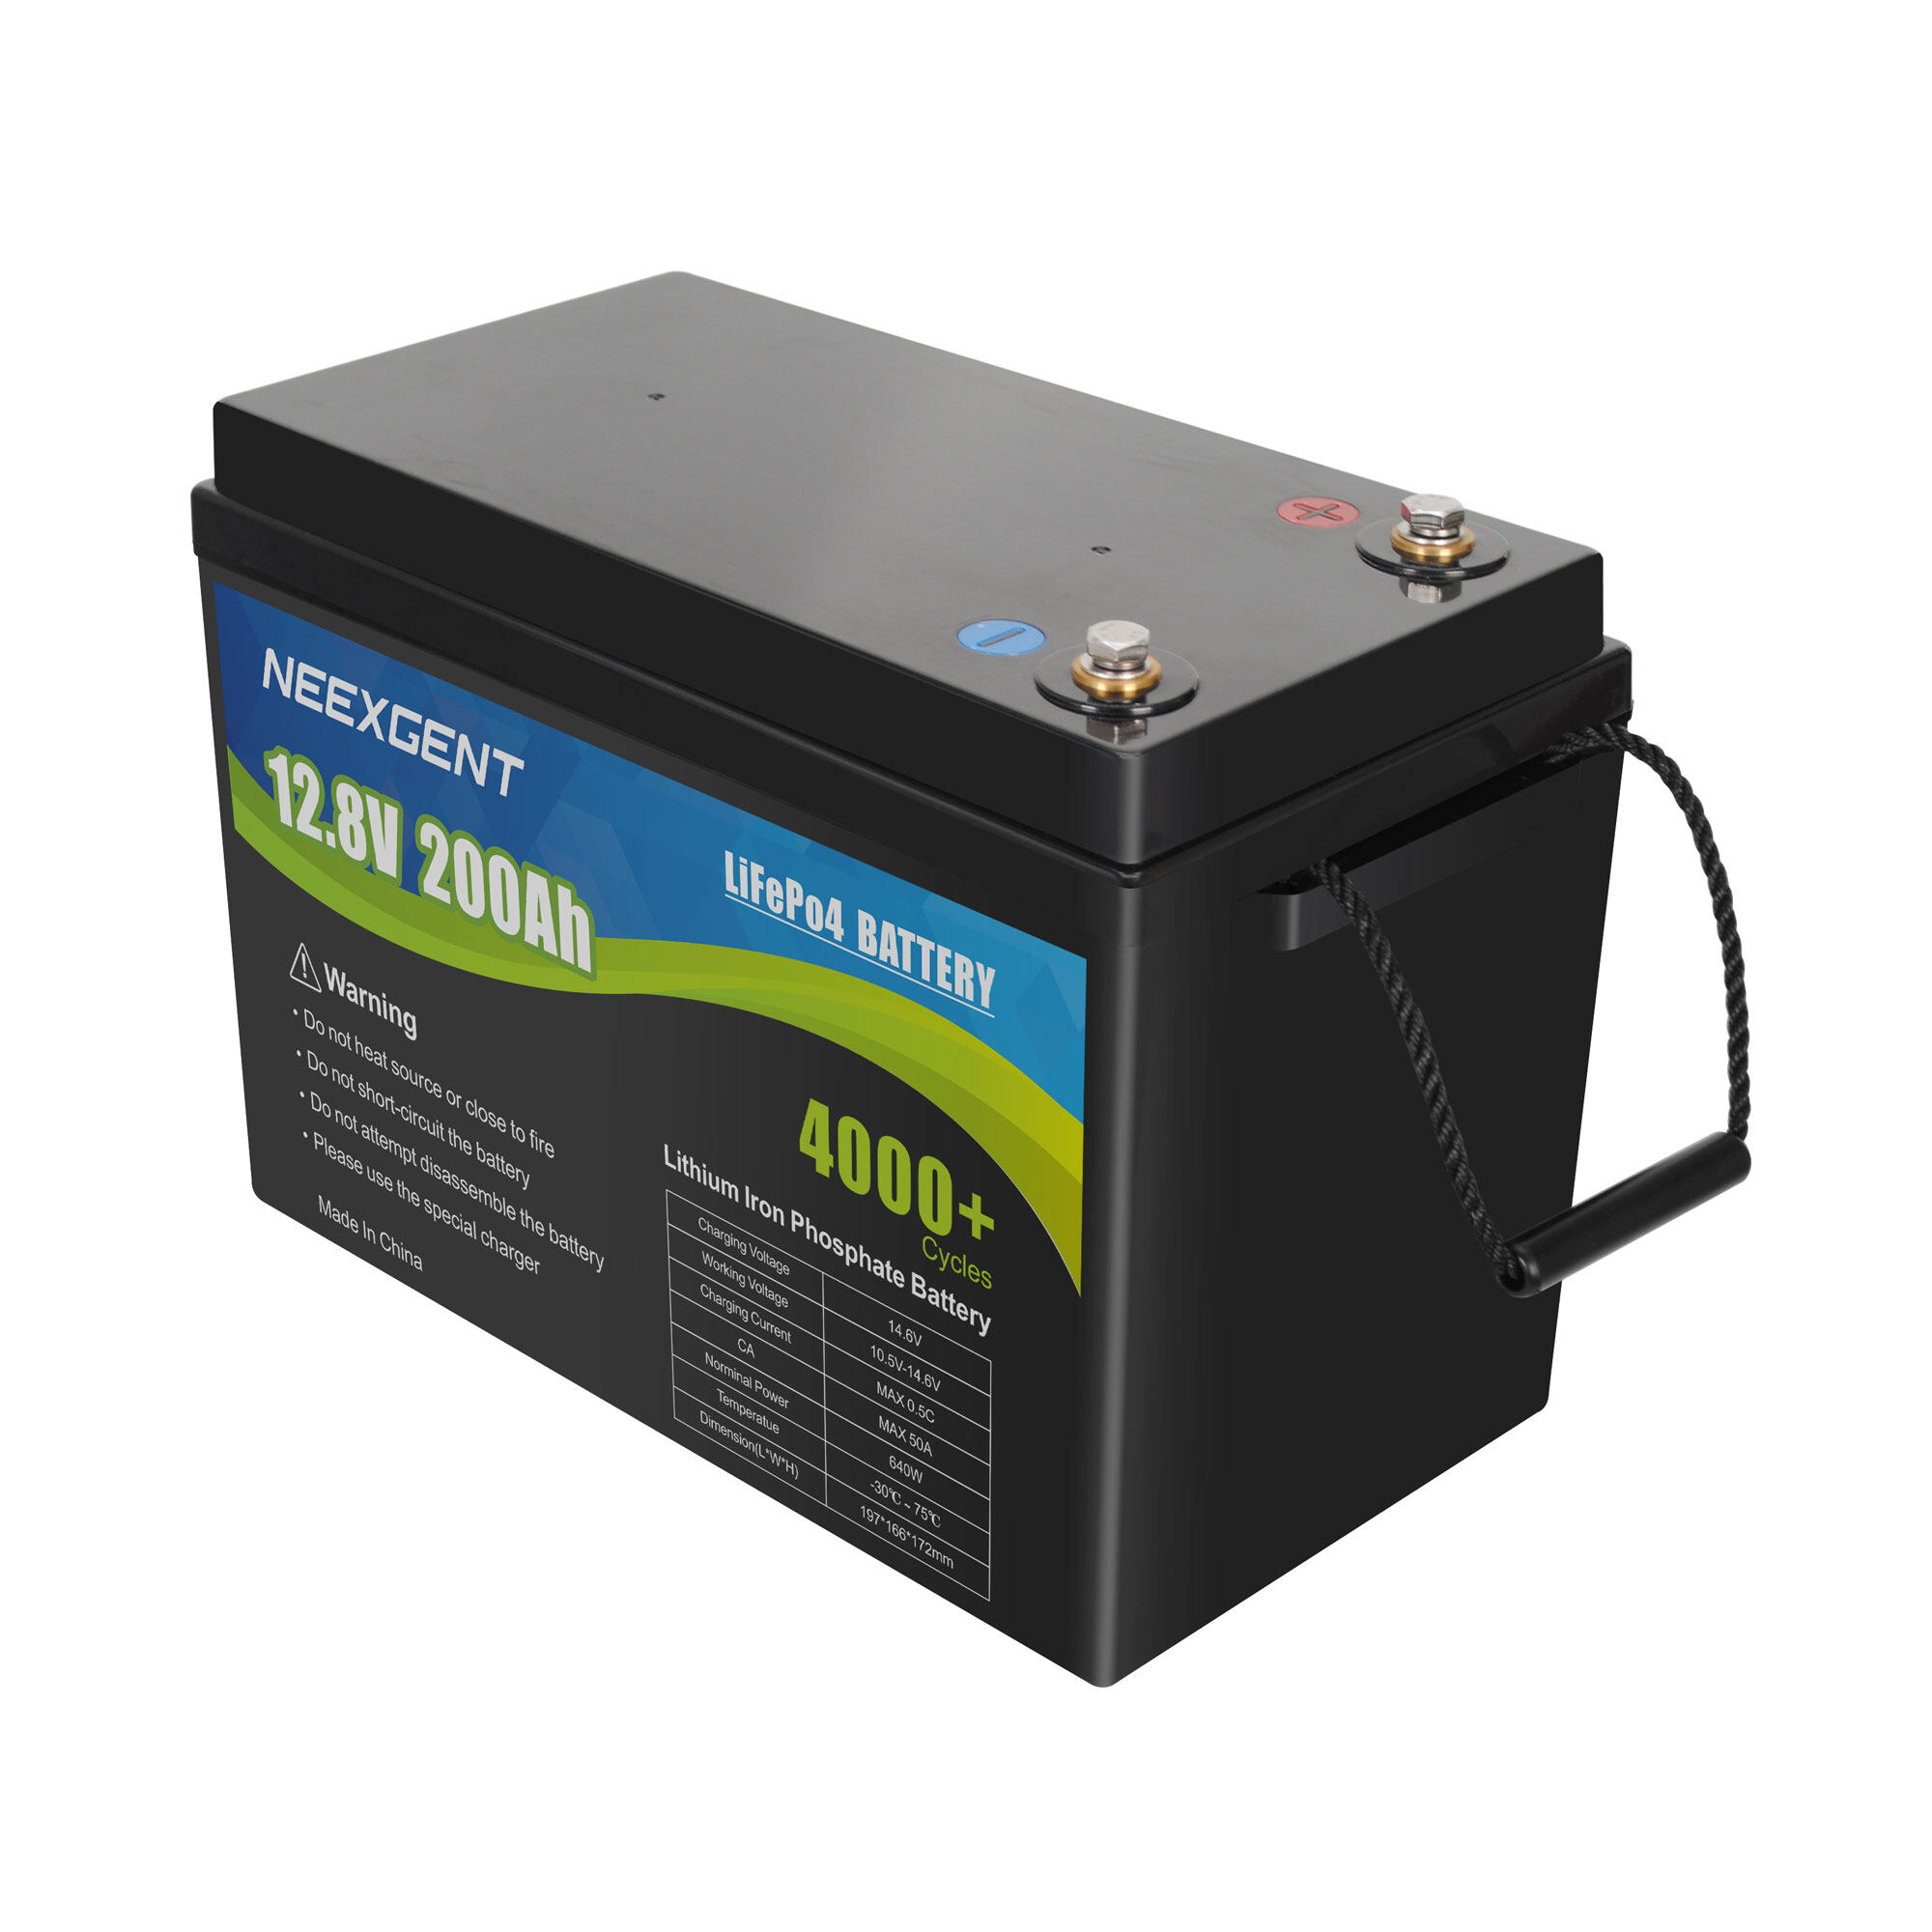 High capacity lifepo4 12.8v 200ah battery pack lithium battery for solar power system